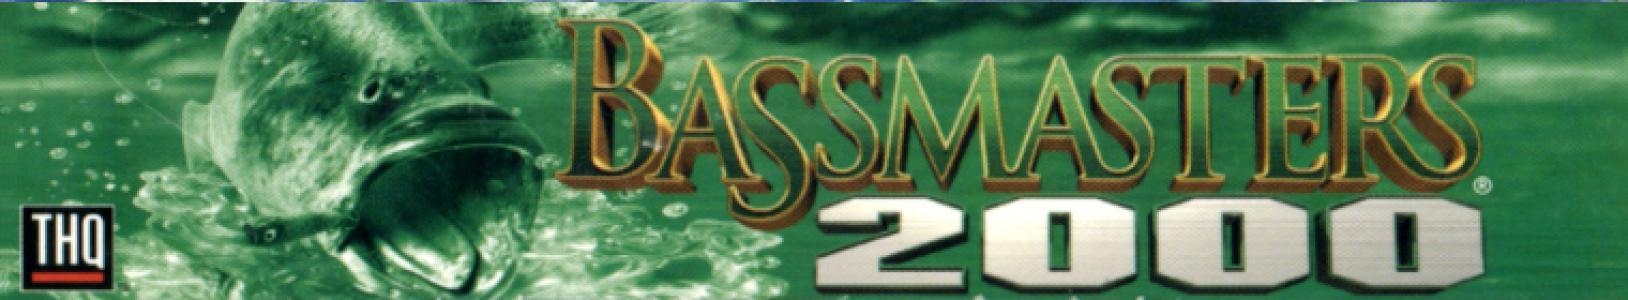 Bassmasters 2000 banner